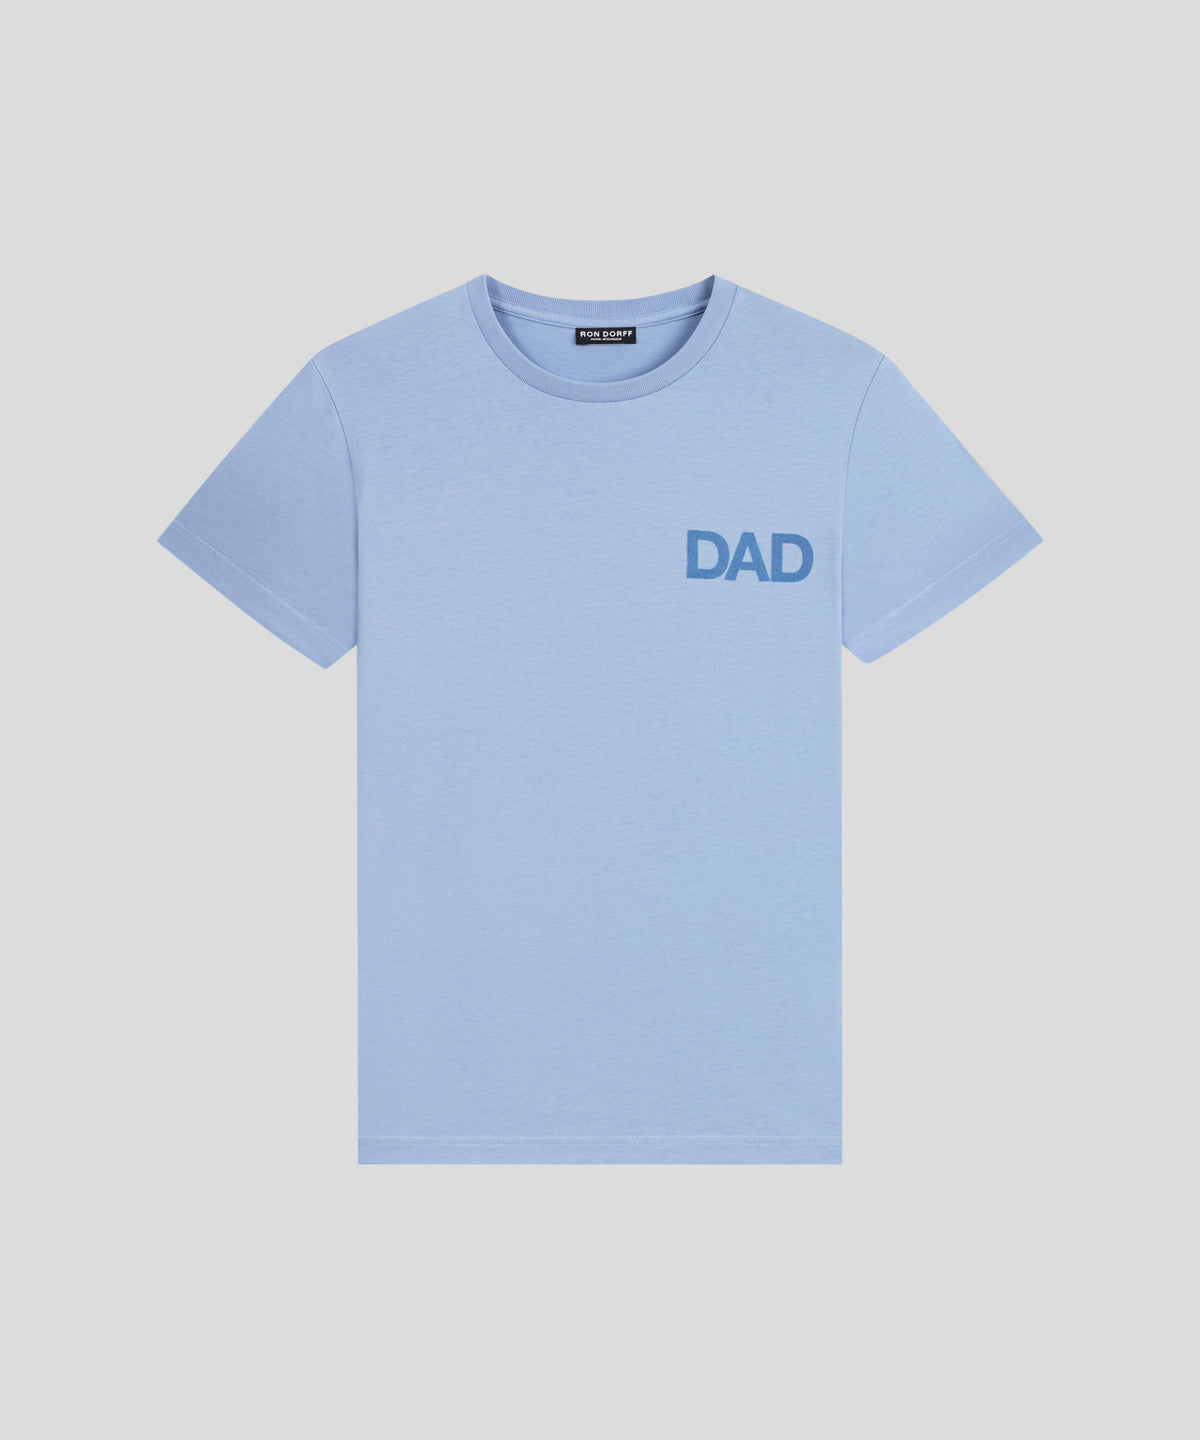 T-shirt en coton organique à imprimé DAD: Bleu ciel